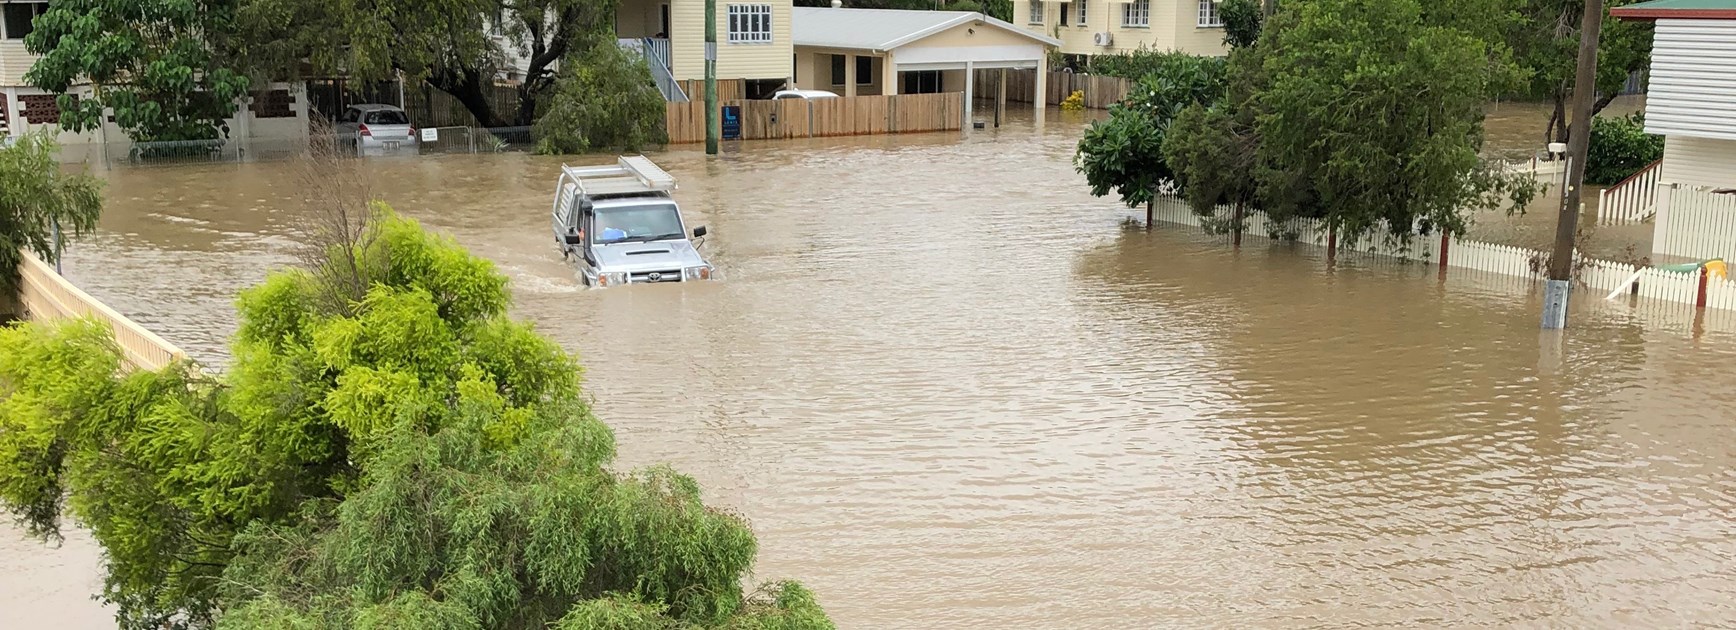 Queensland Flooding - safety first